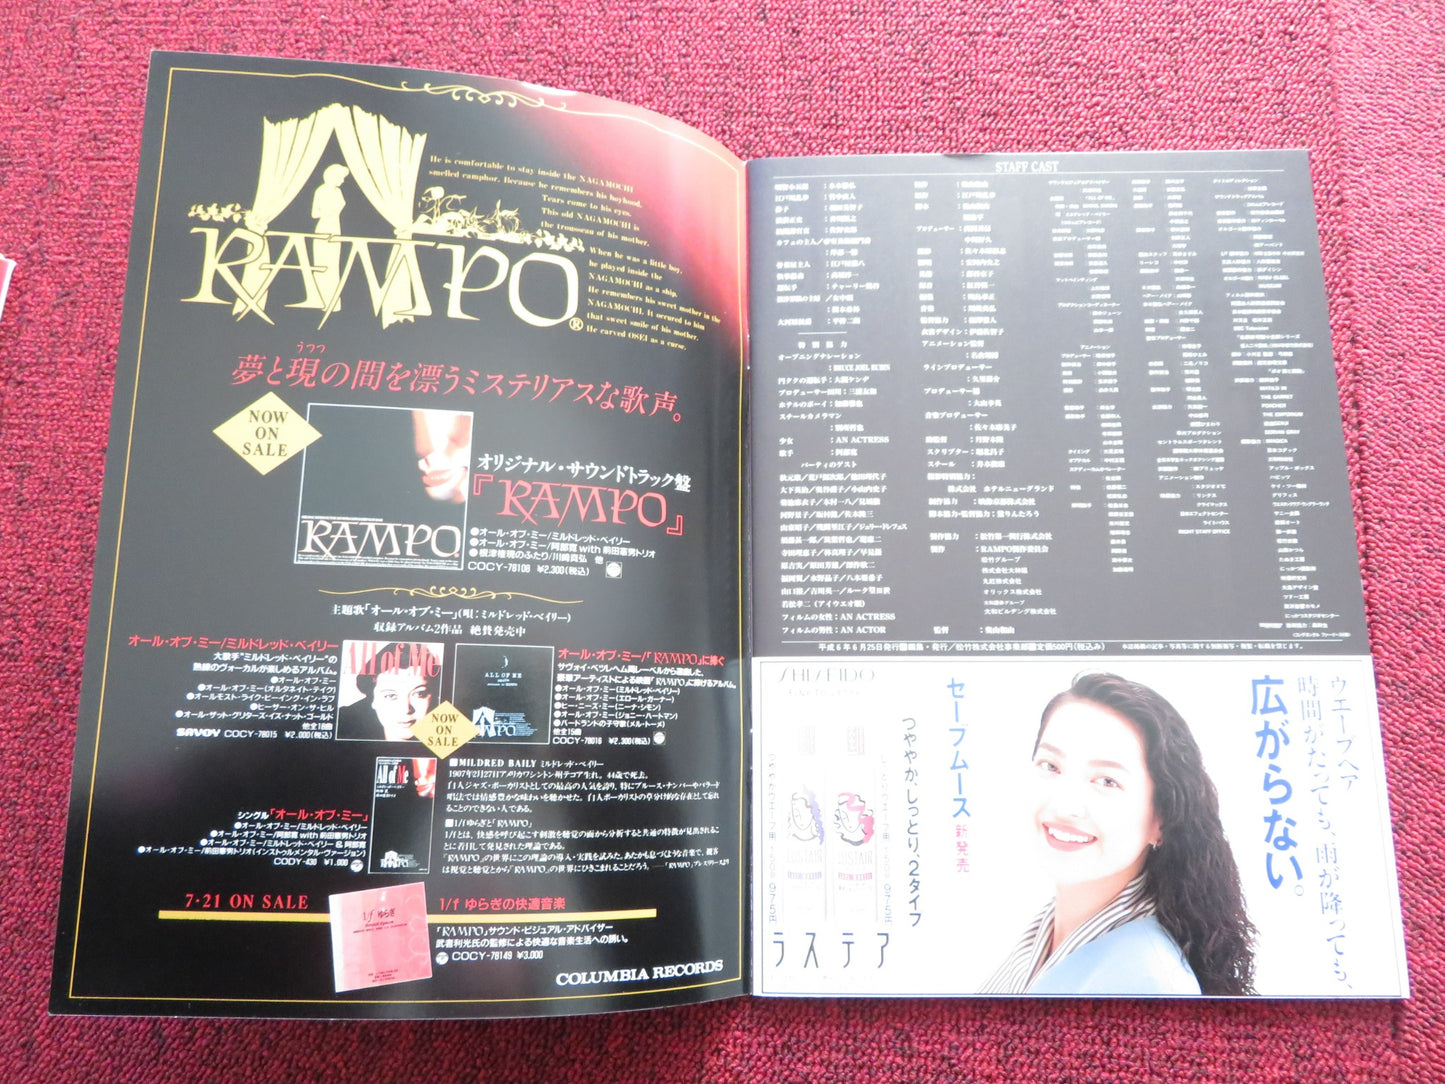 MYSTERY OF RAMPO JAPANESE BROCHURE / PRESS BOOK MASAHIRO MOTOKI N. TAKENAKA 1994